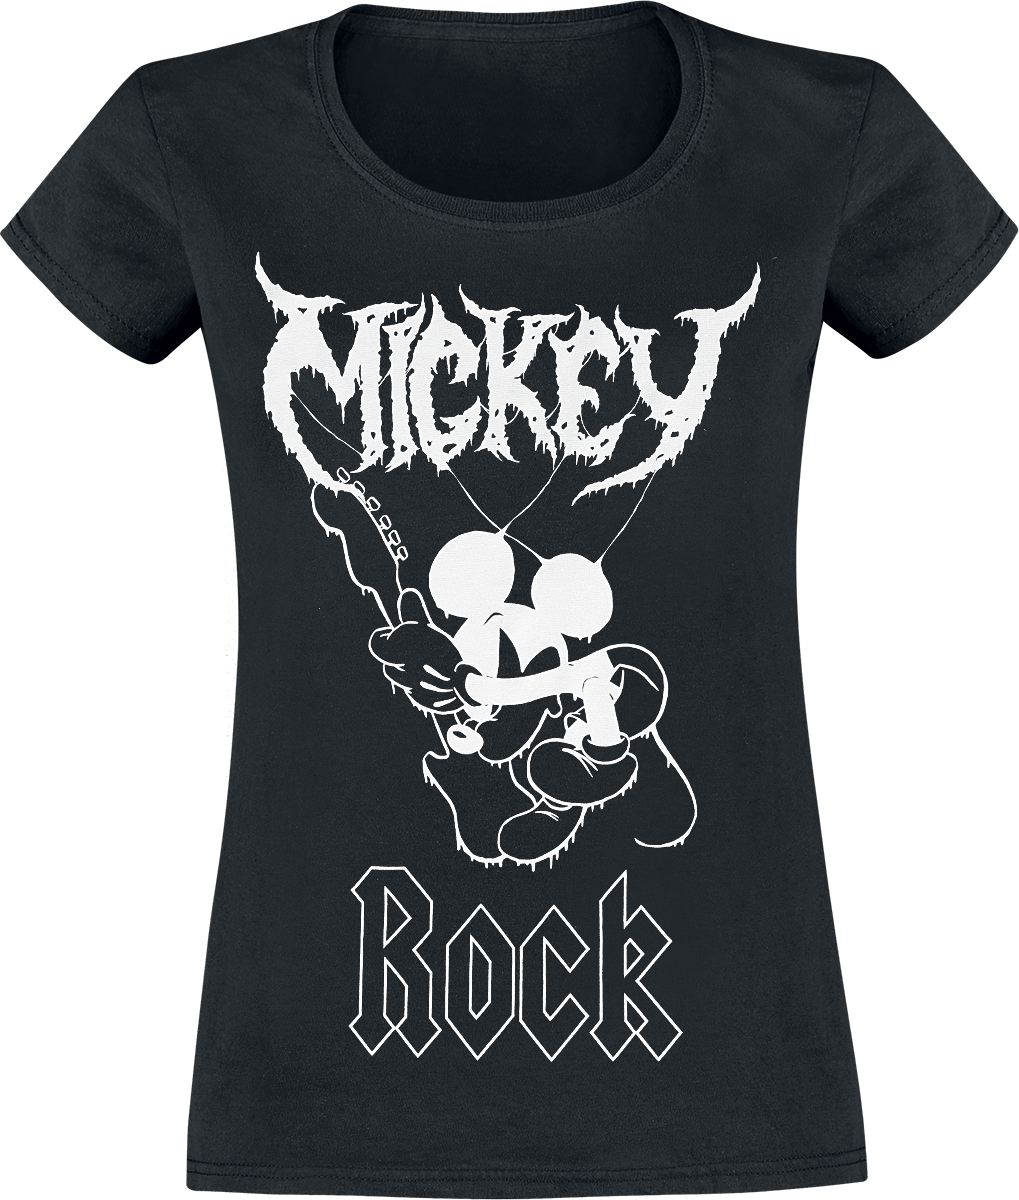 Mickey Mouse - Rock - Girls shirt - black image